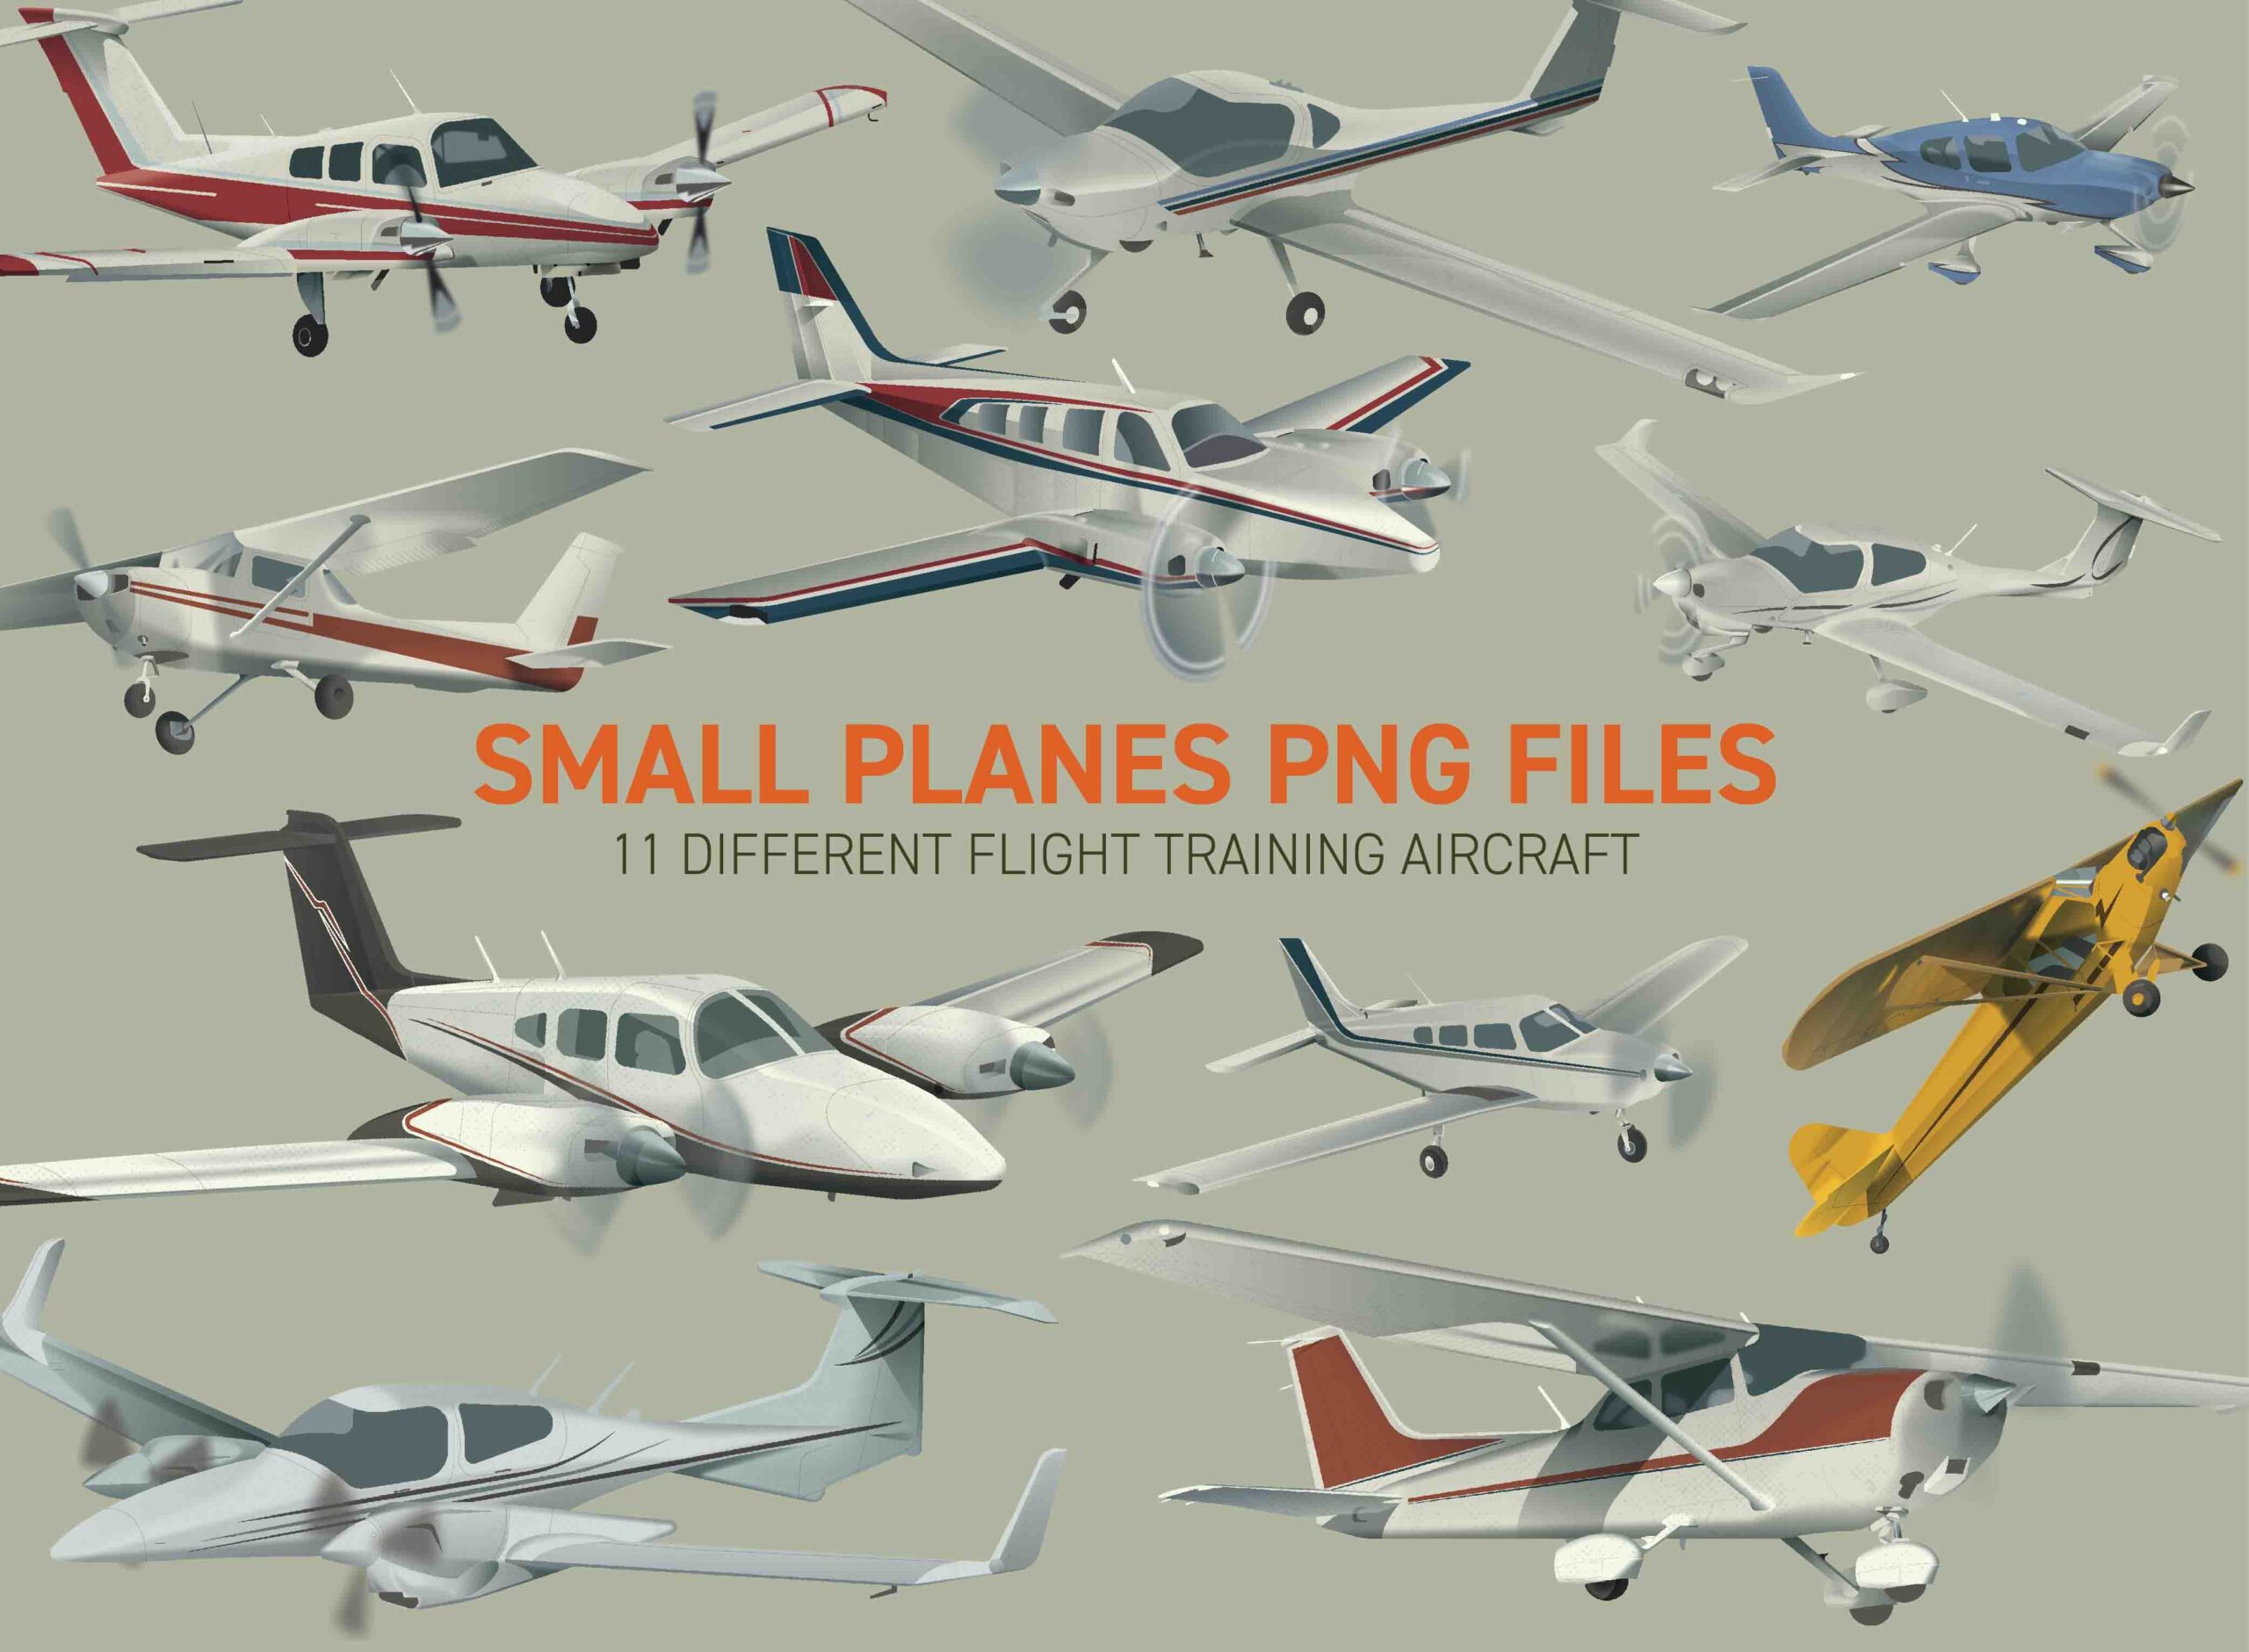 Aircraft-listing-lelinhtdigitals_small-training-aircraft-airplane-clip-arts-png-files